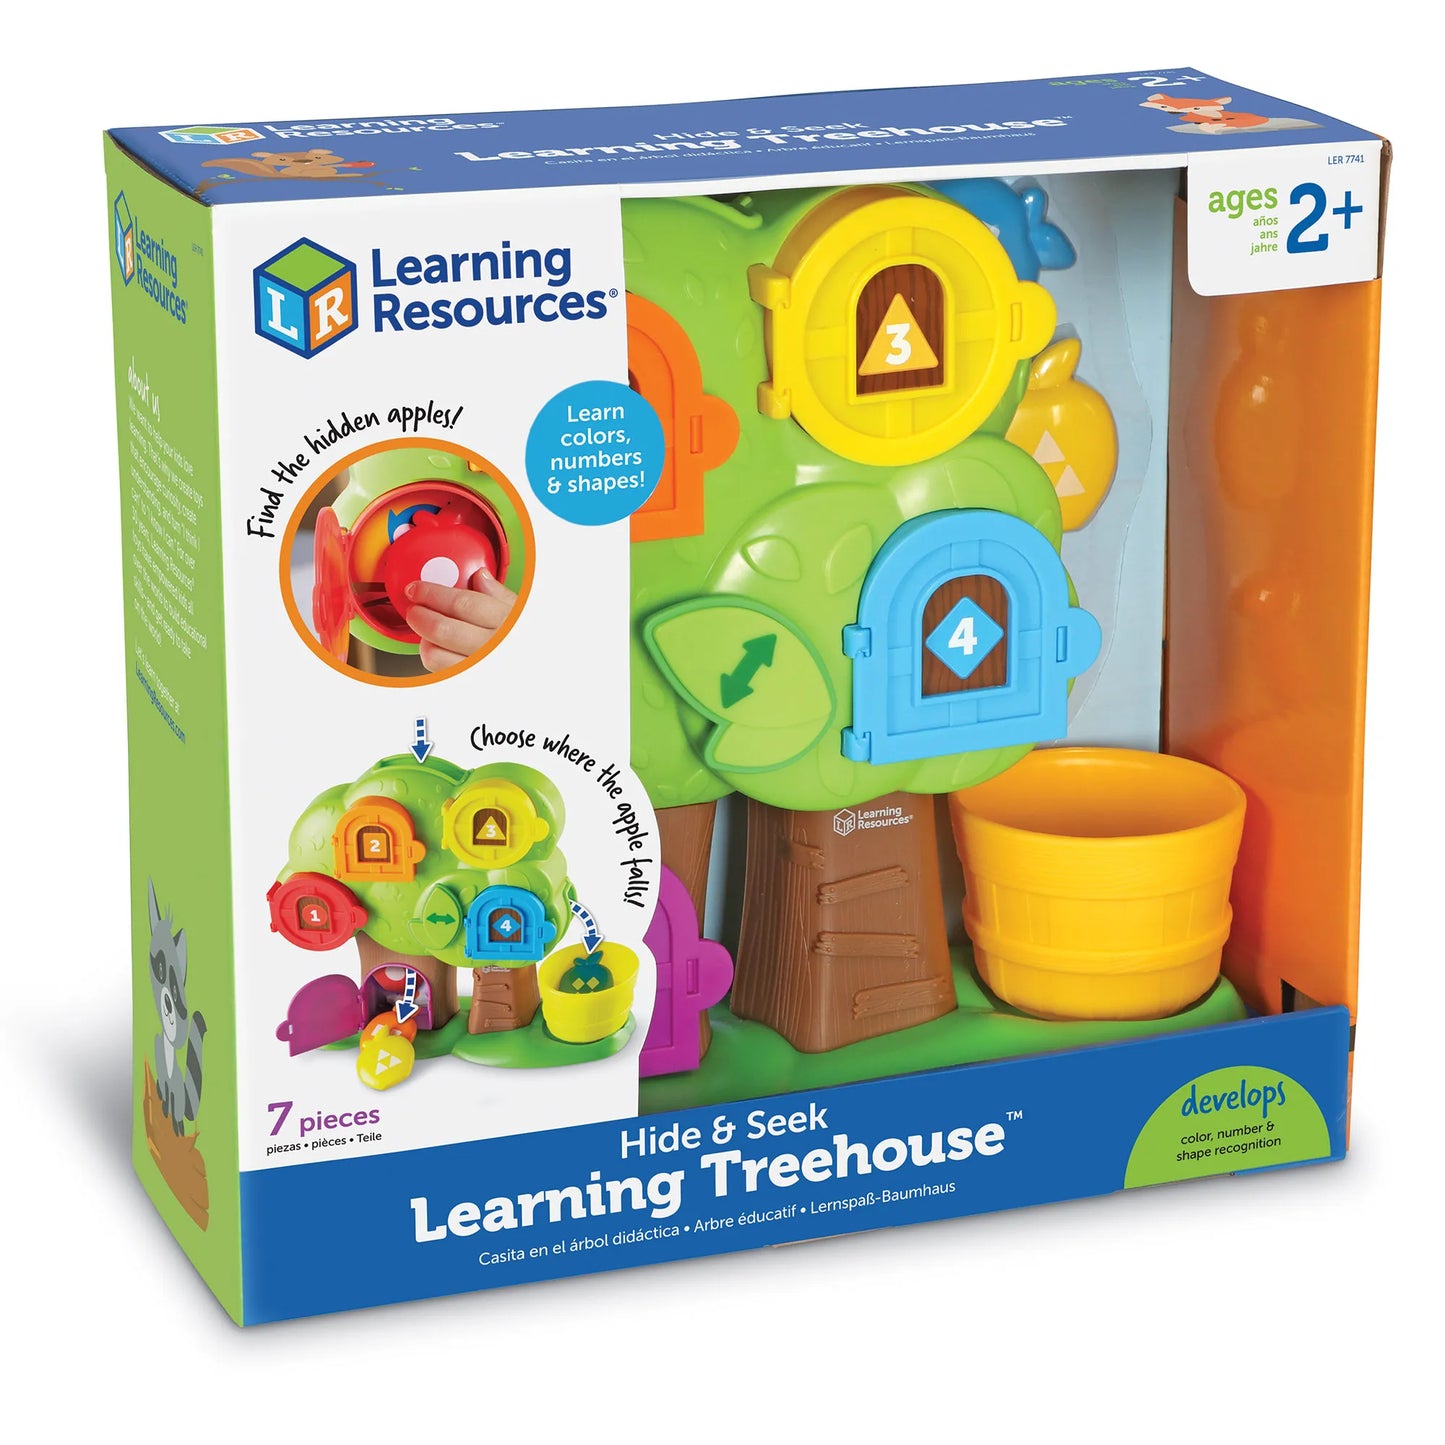 Learning Resources Hide & Seek Learning Treehouse